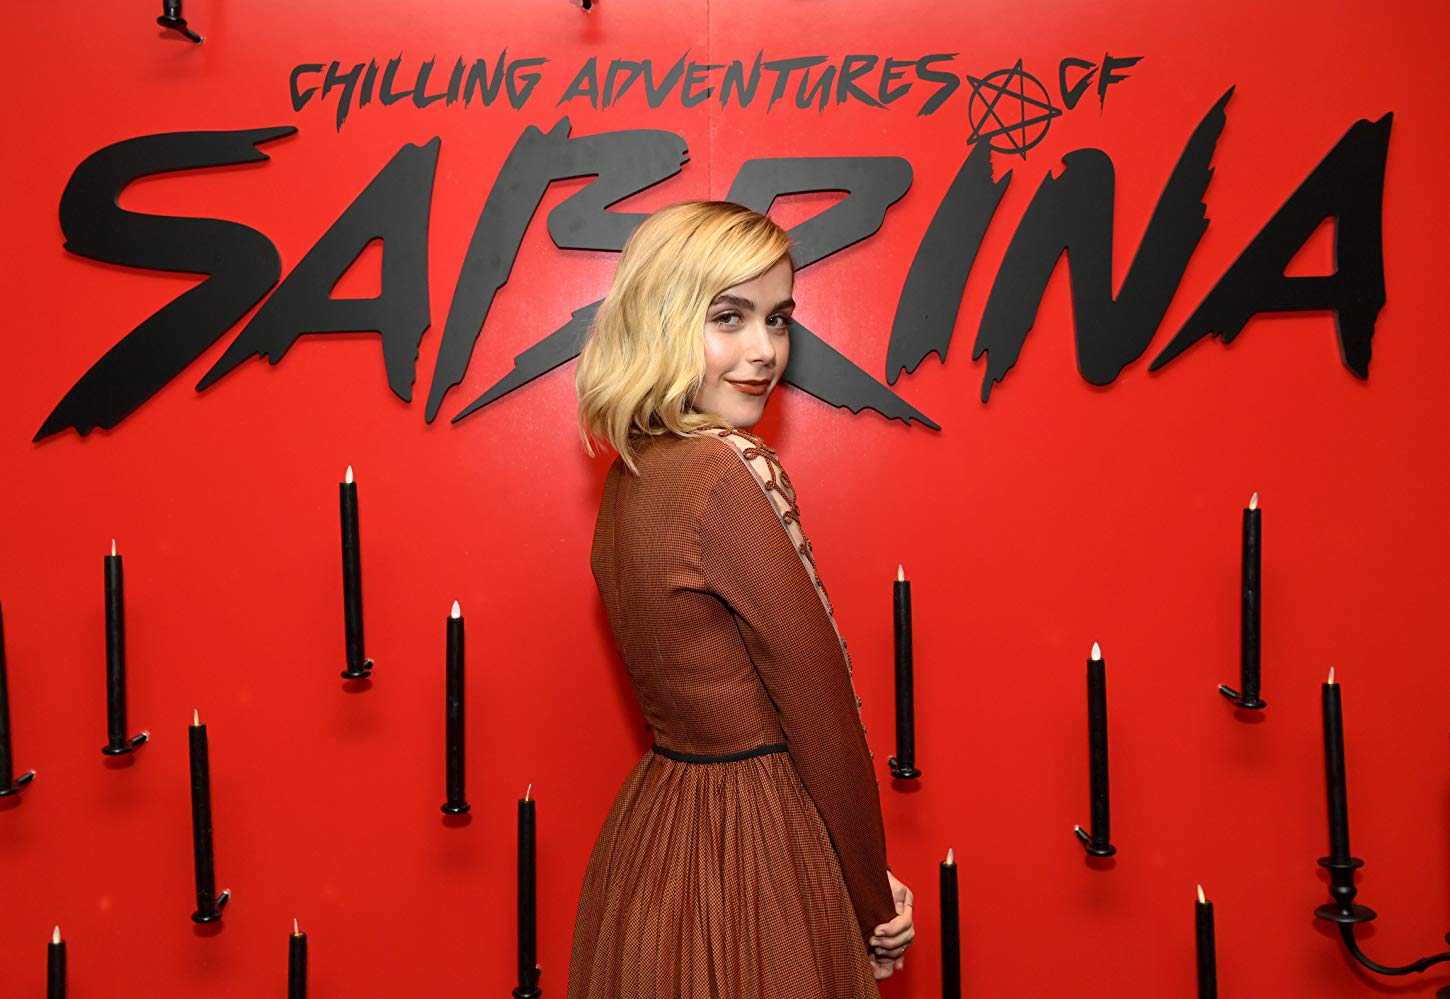 Kiernan Shipka at an event for Chilling Adventures of Sabrina